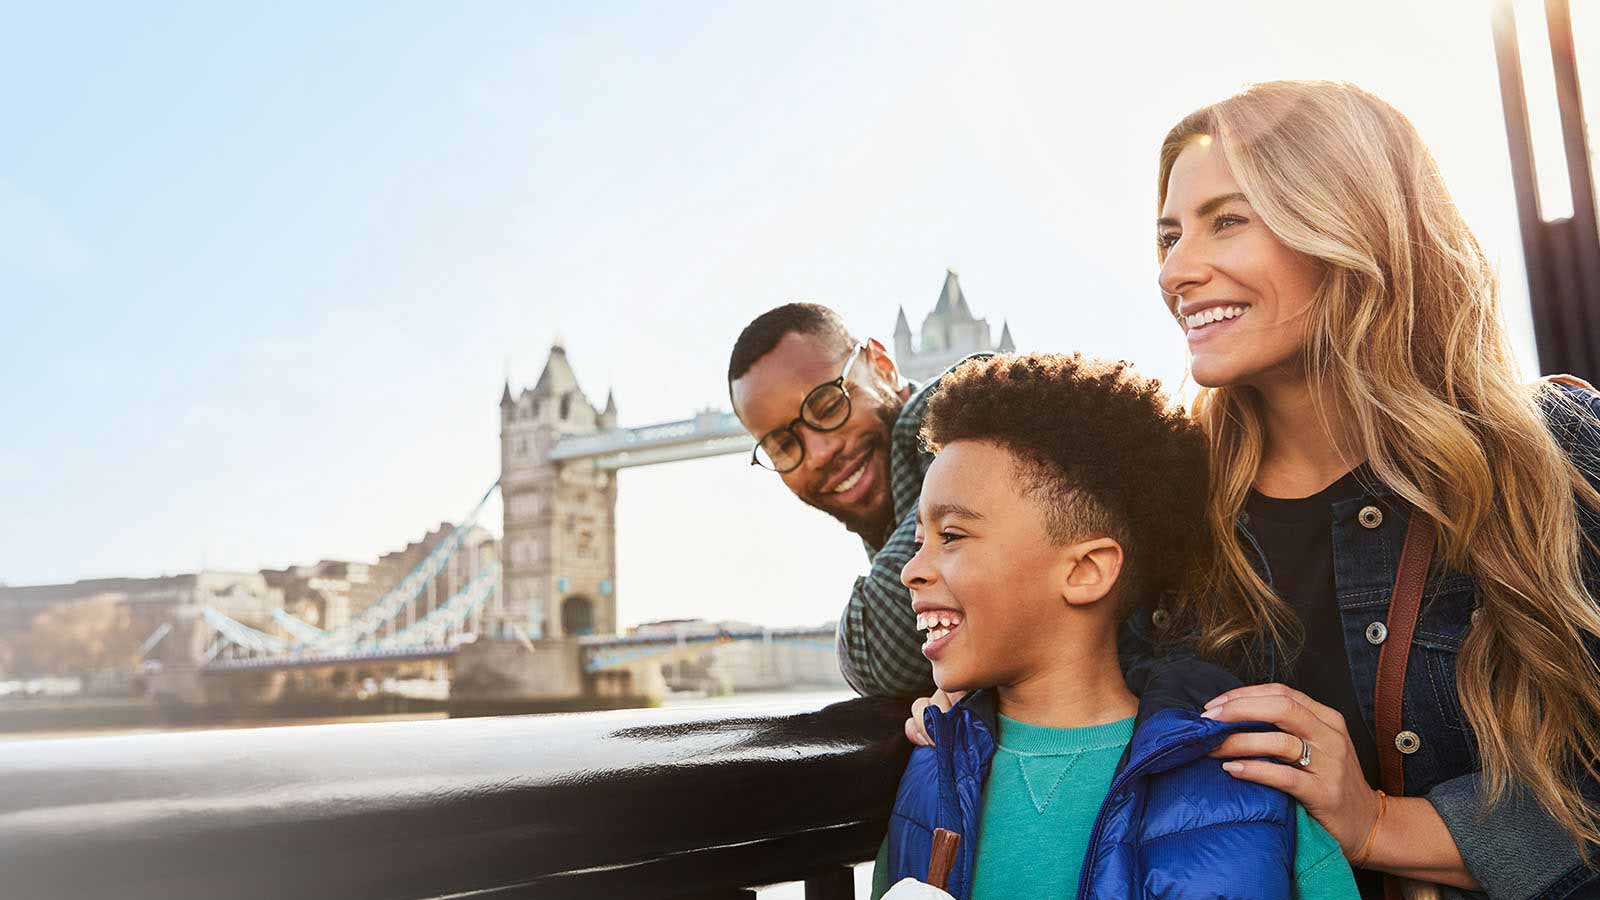 A family enjoying London sightseeing along the river Thames.